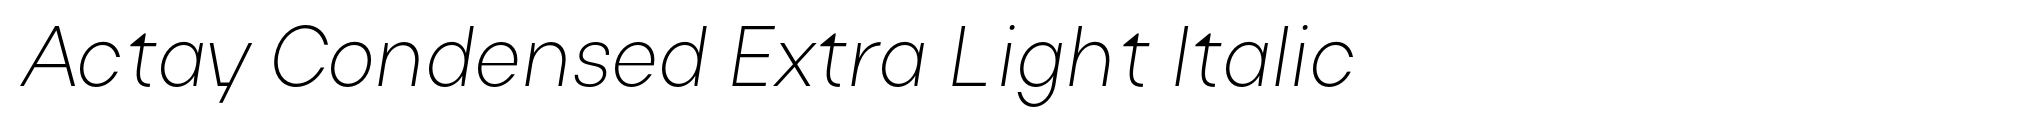 Actay Condensed Extra Light Italic image